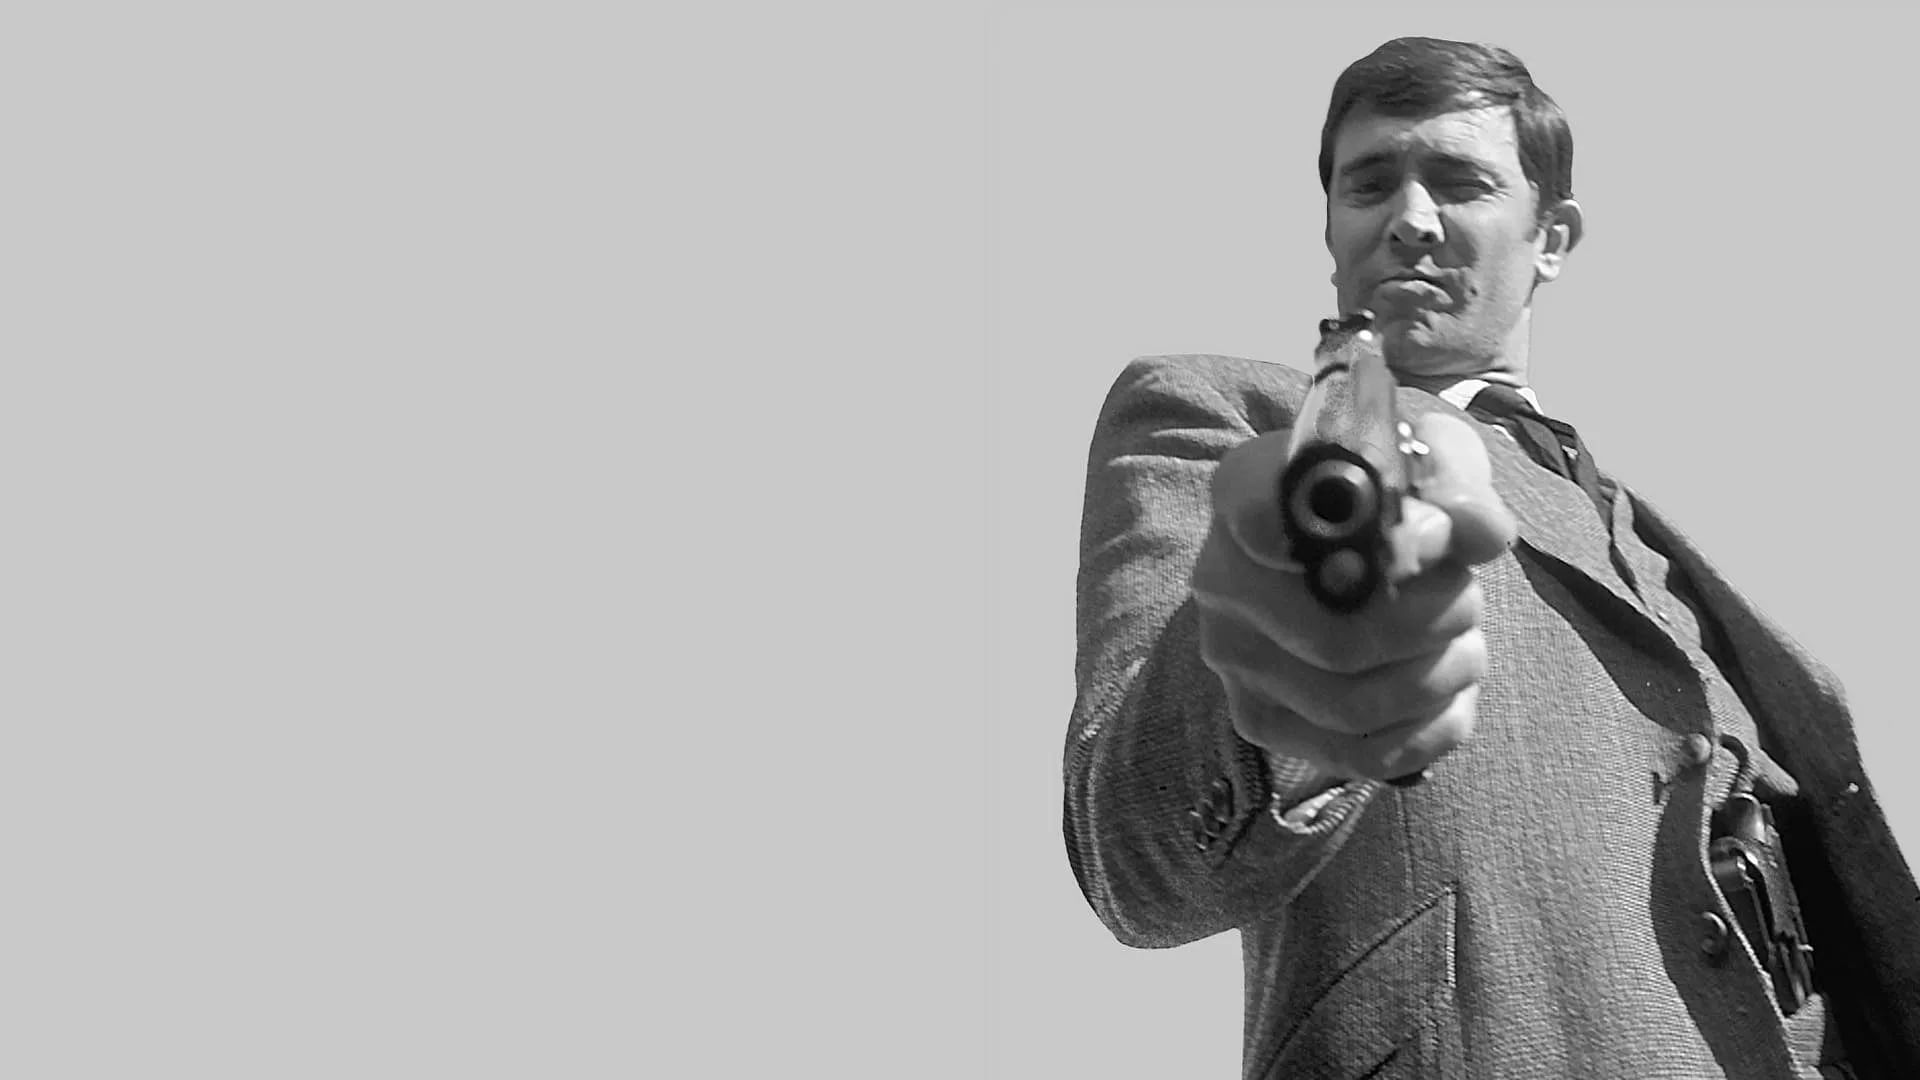 James Bond Image